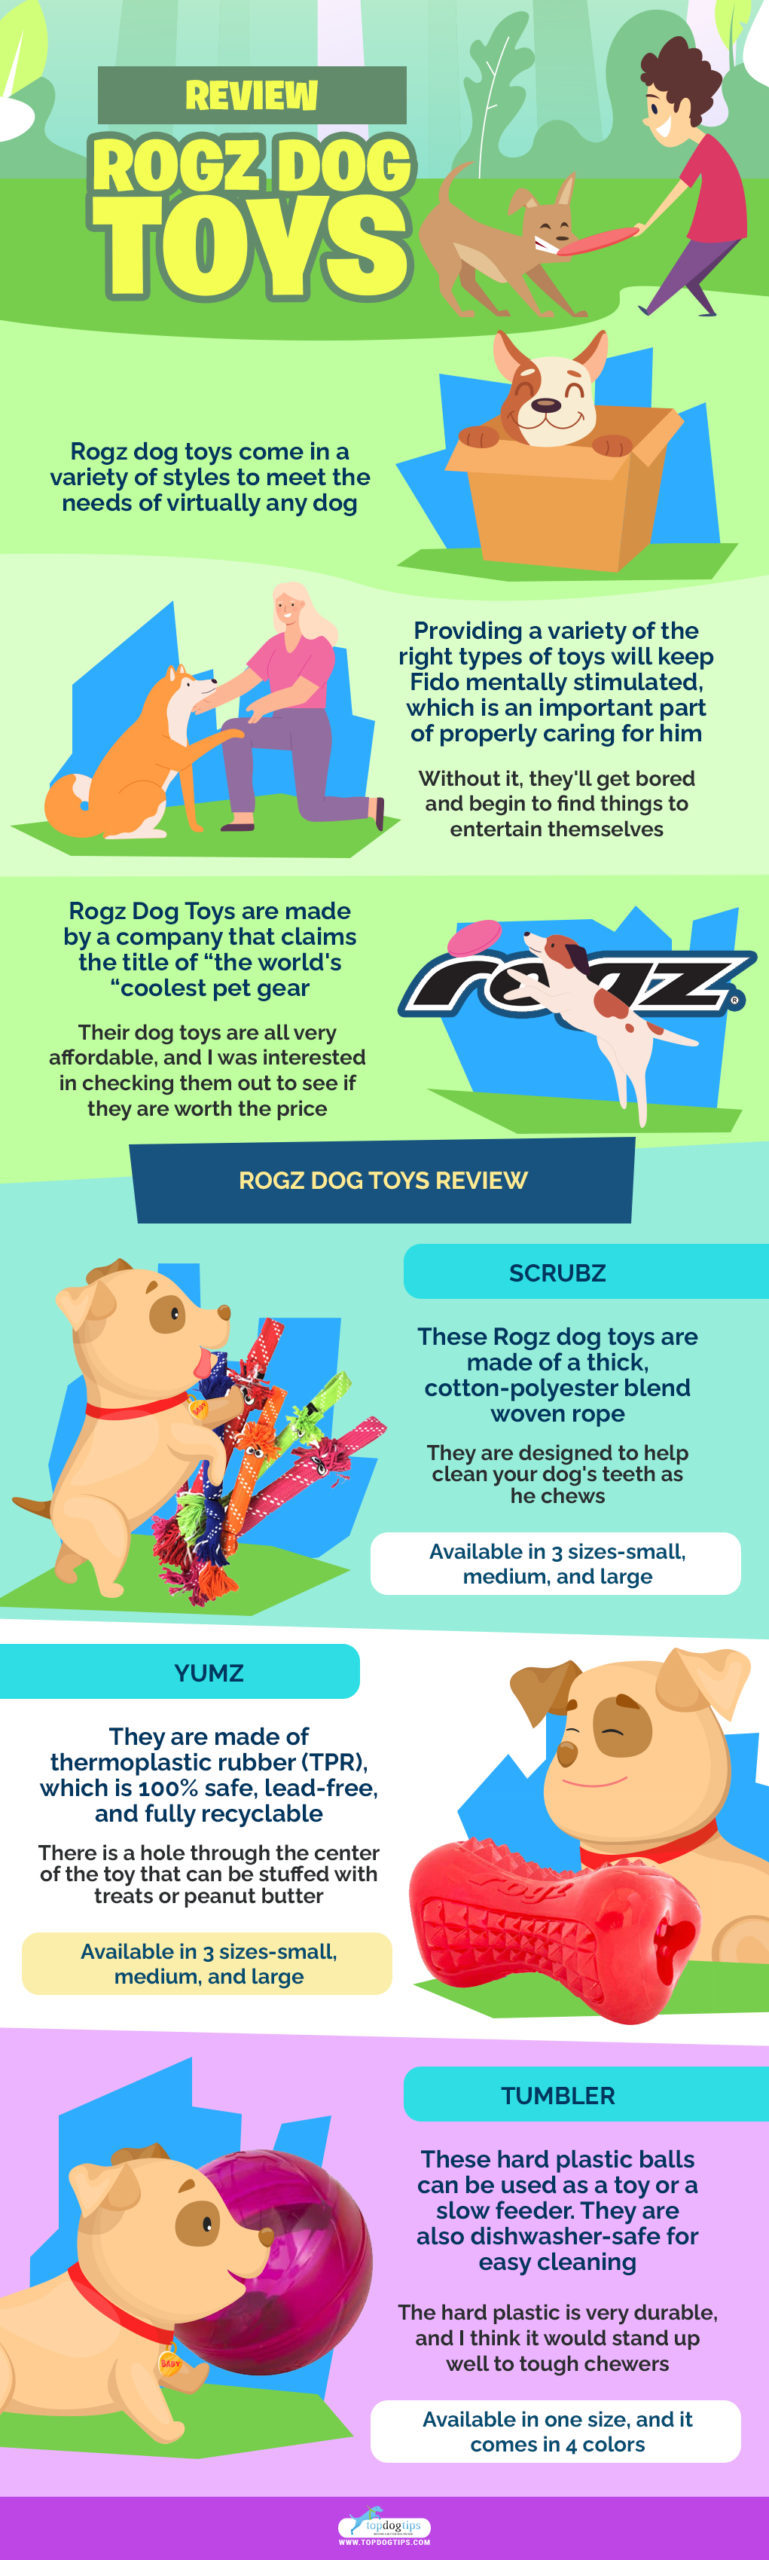 Review Rogz Dog Toys